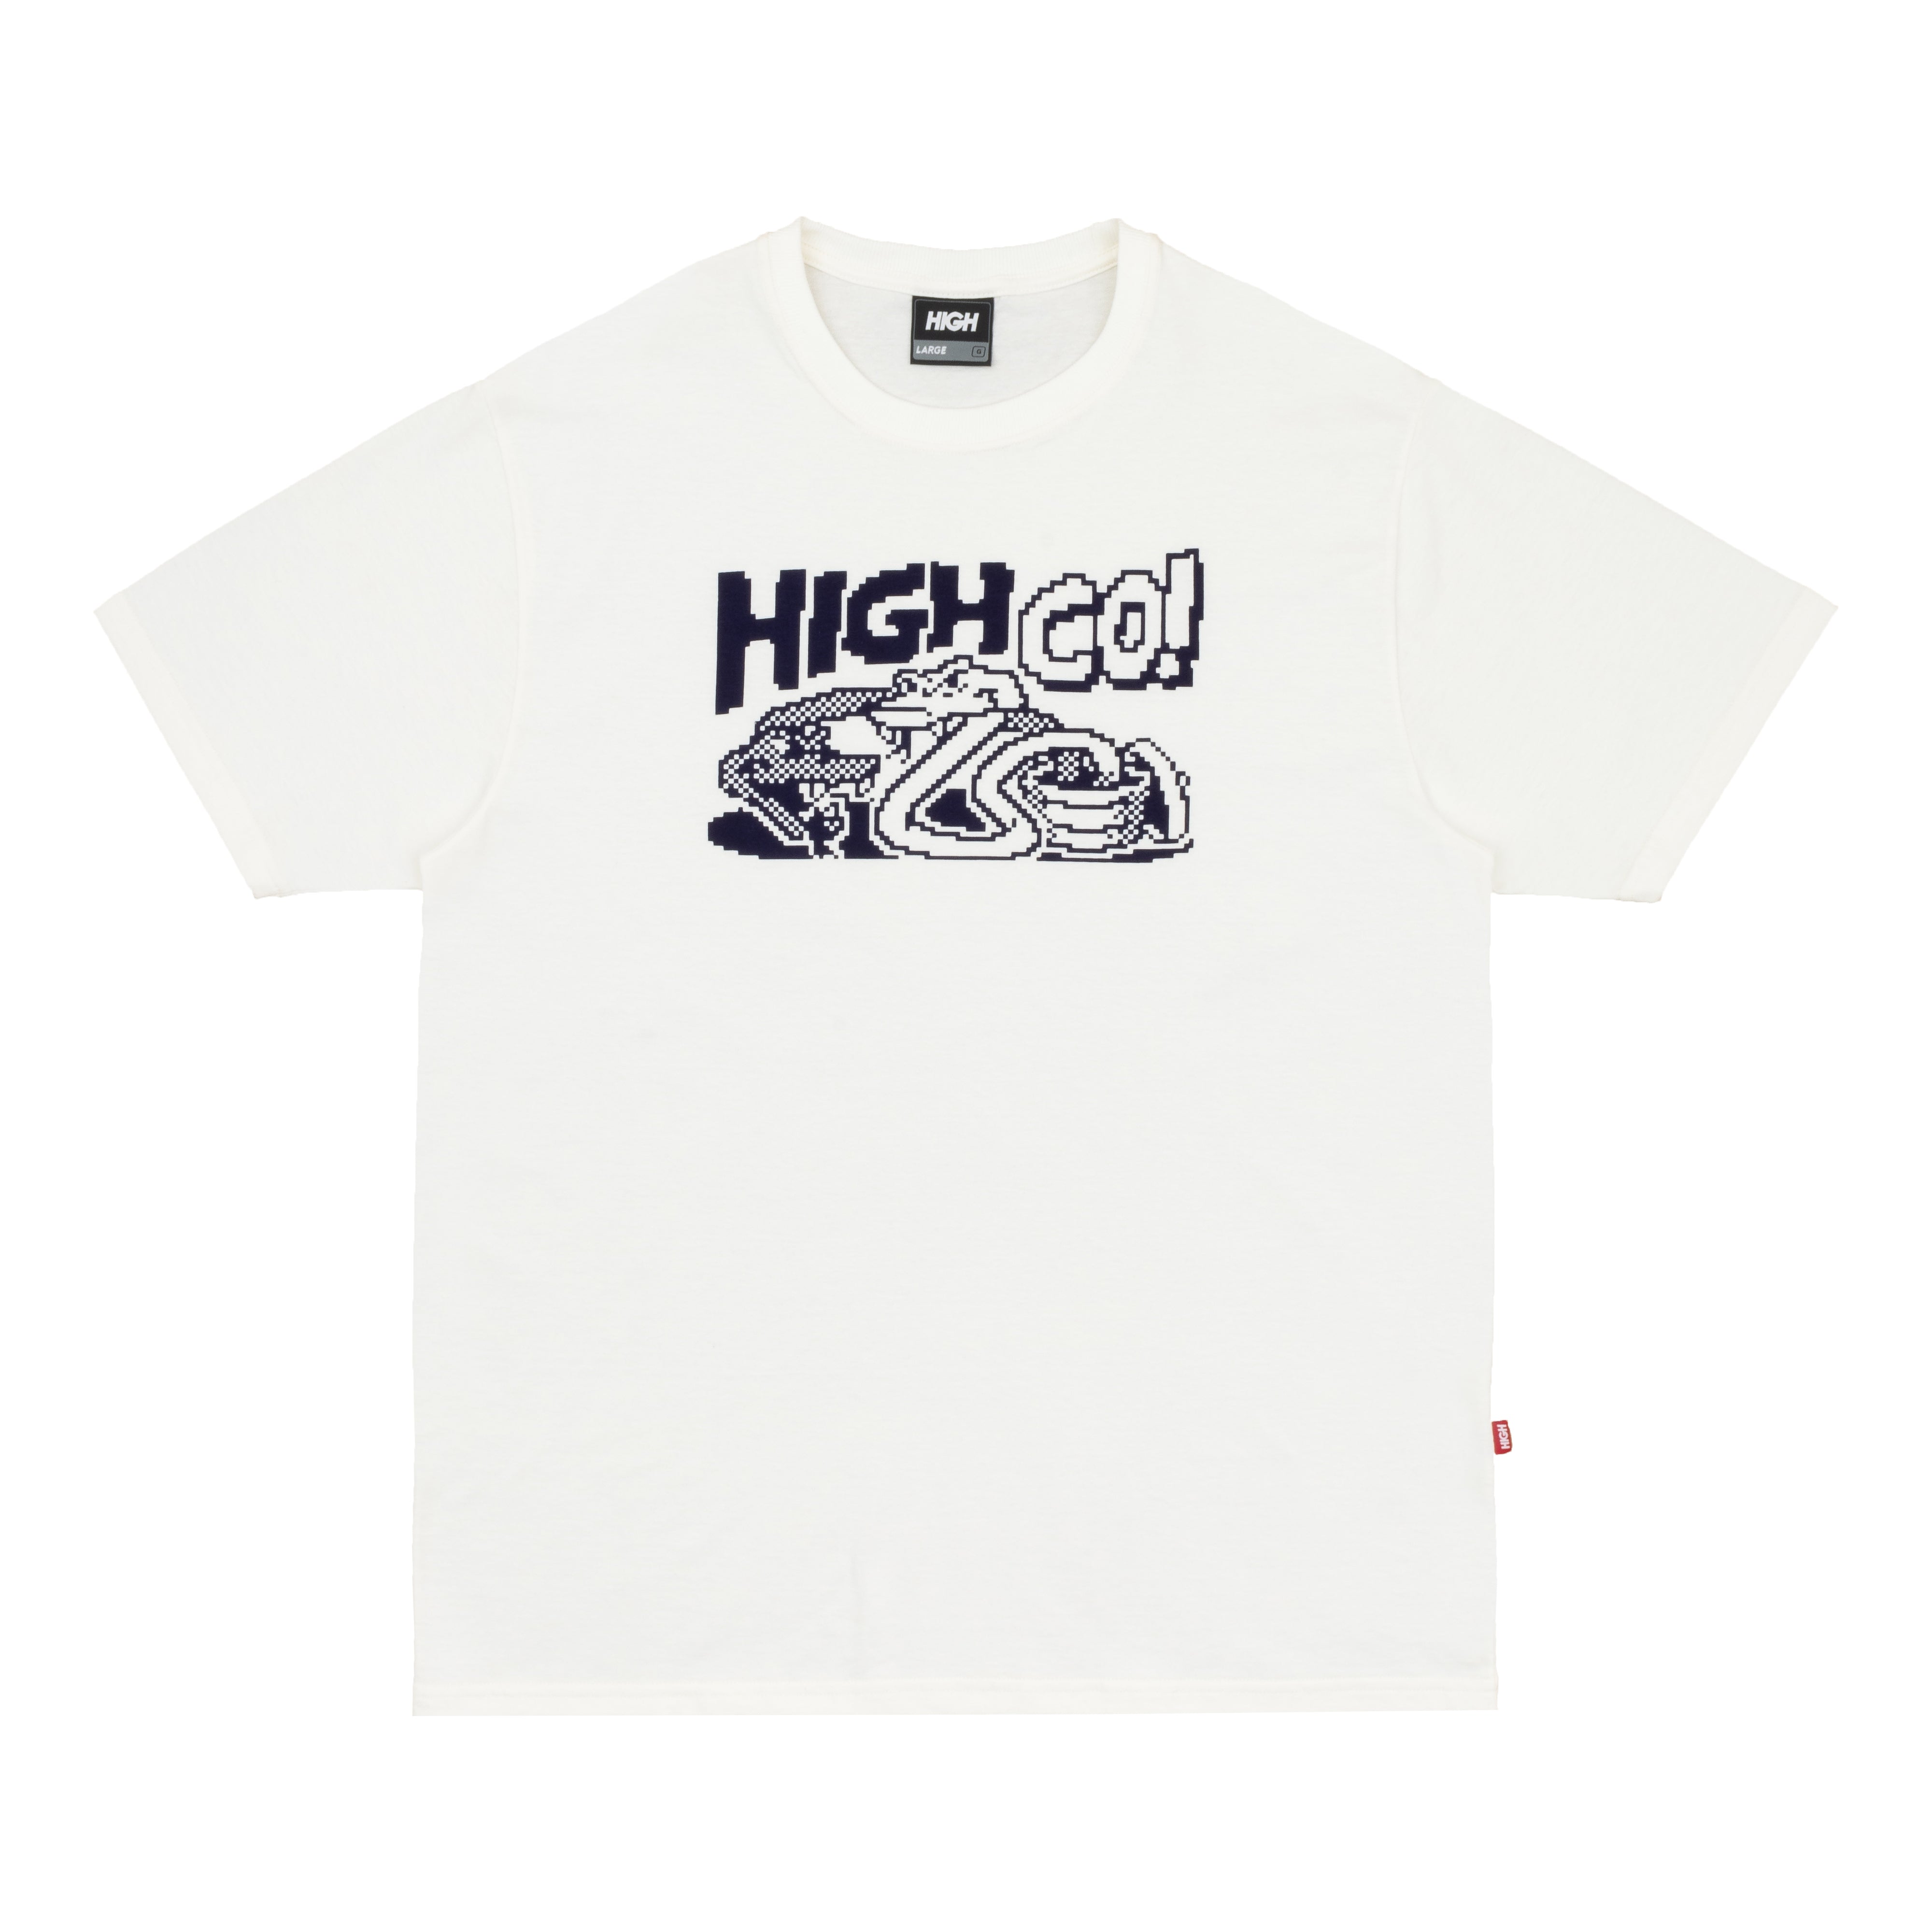 HIGH - Camiseta Cellphone White